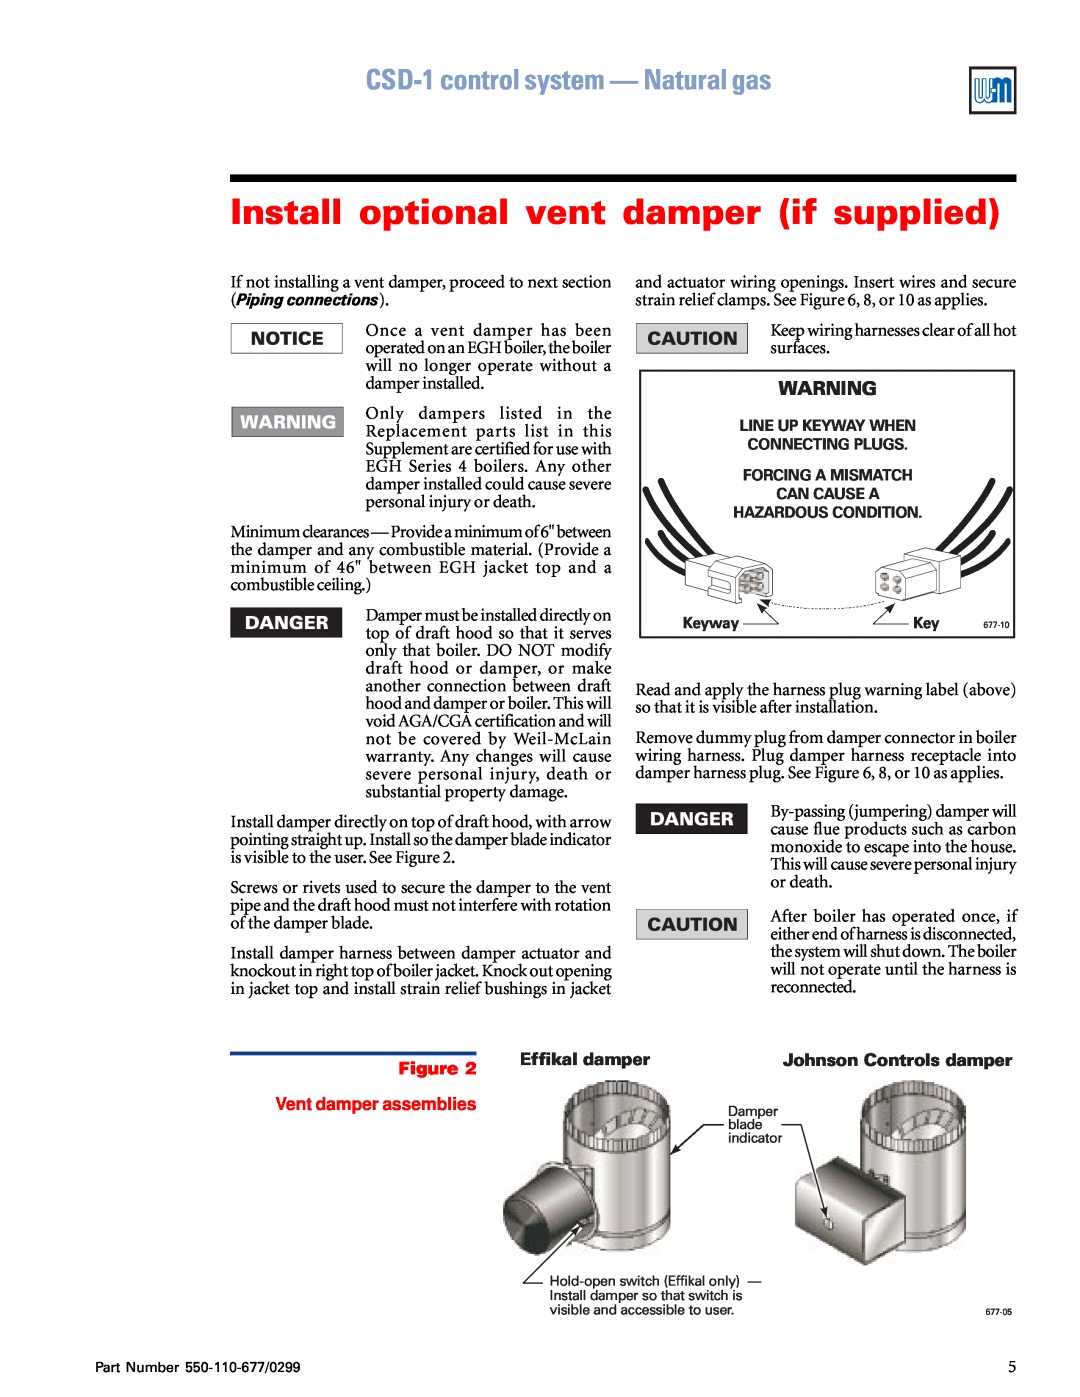 Weil-McLain EGH-125, EGH-105 Install optional vent damper if supplied, CSD-1control system - Natural gas, Effikal damper 